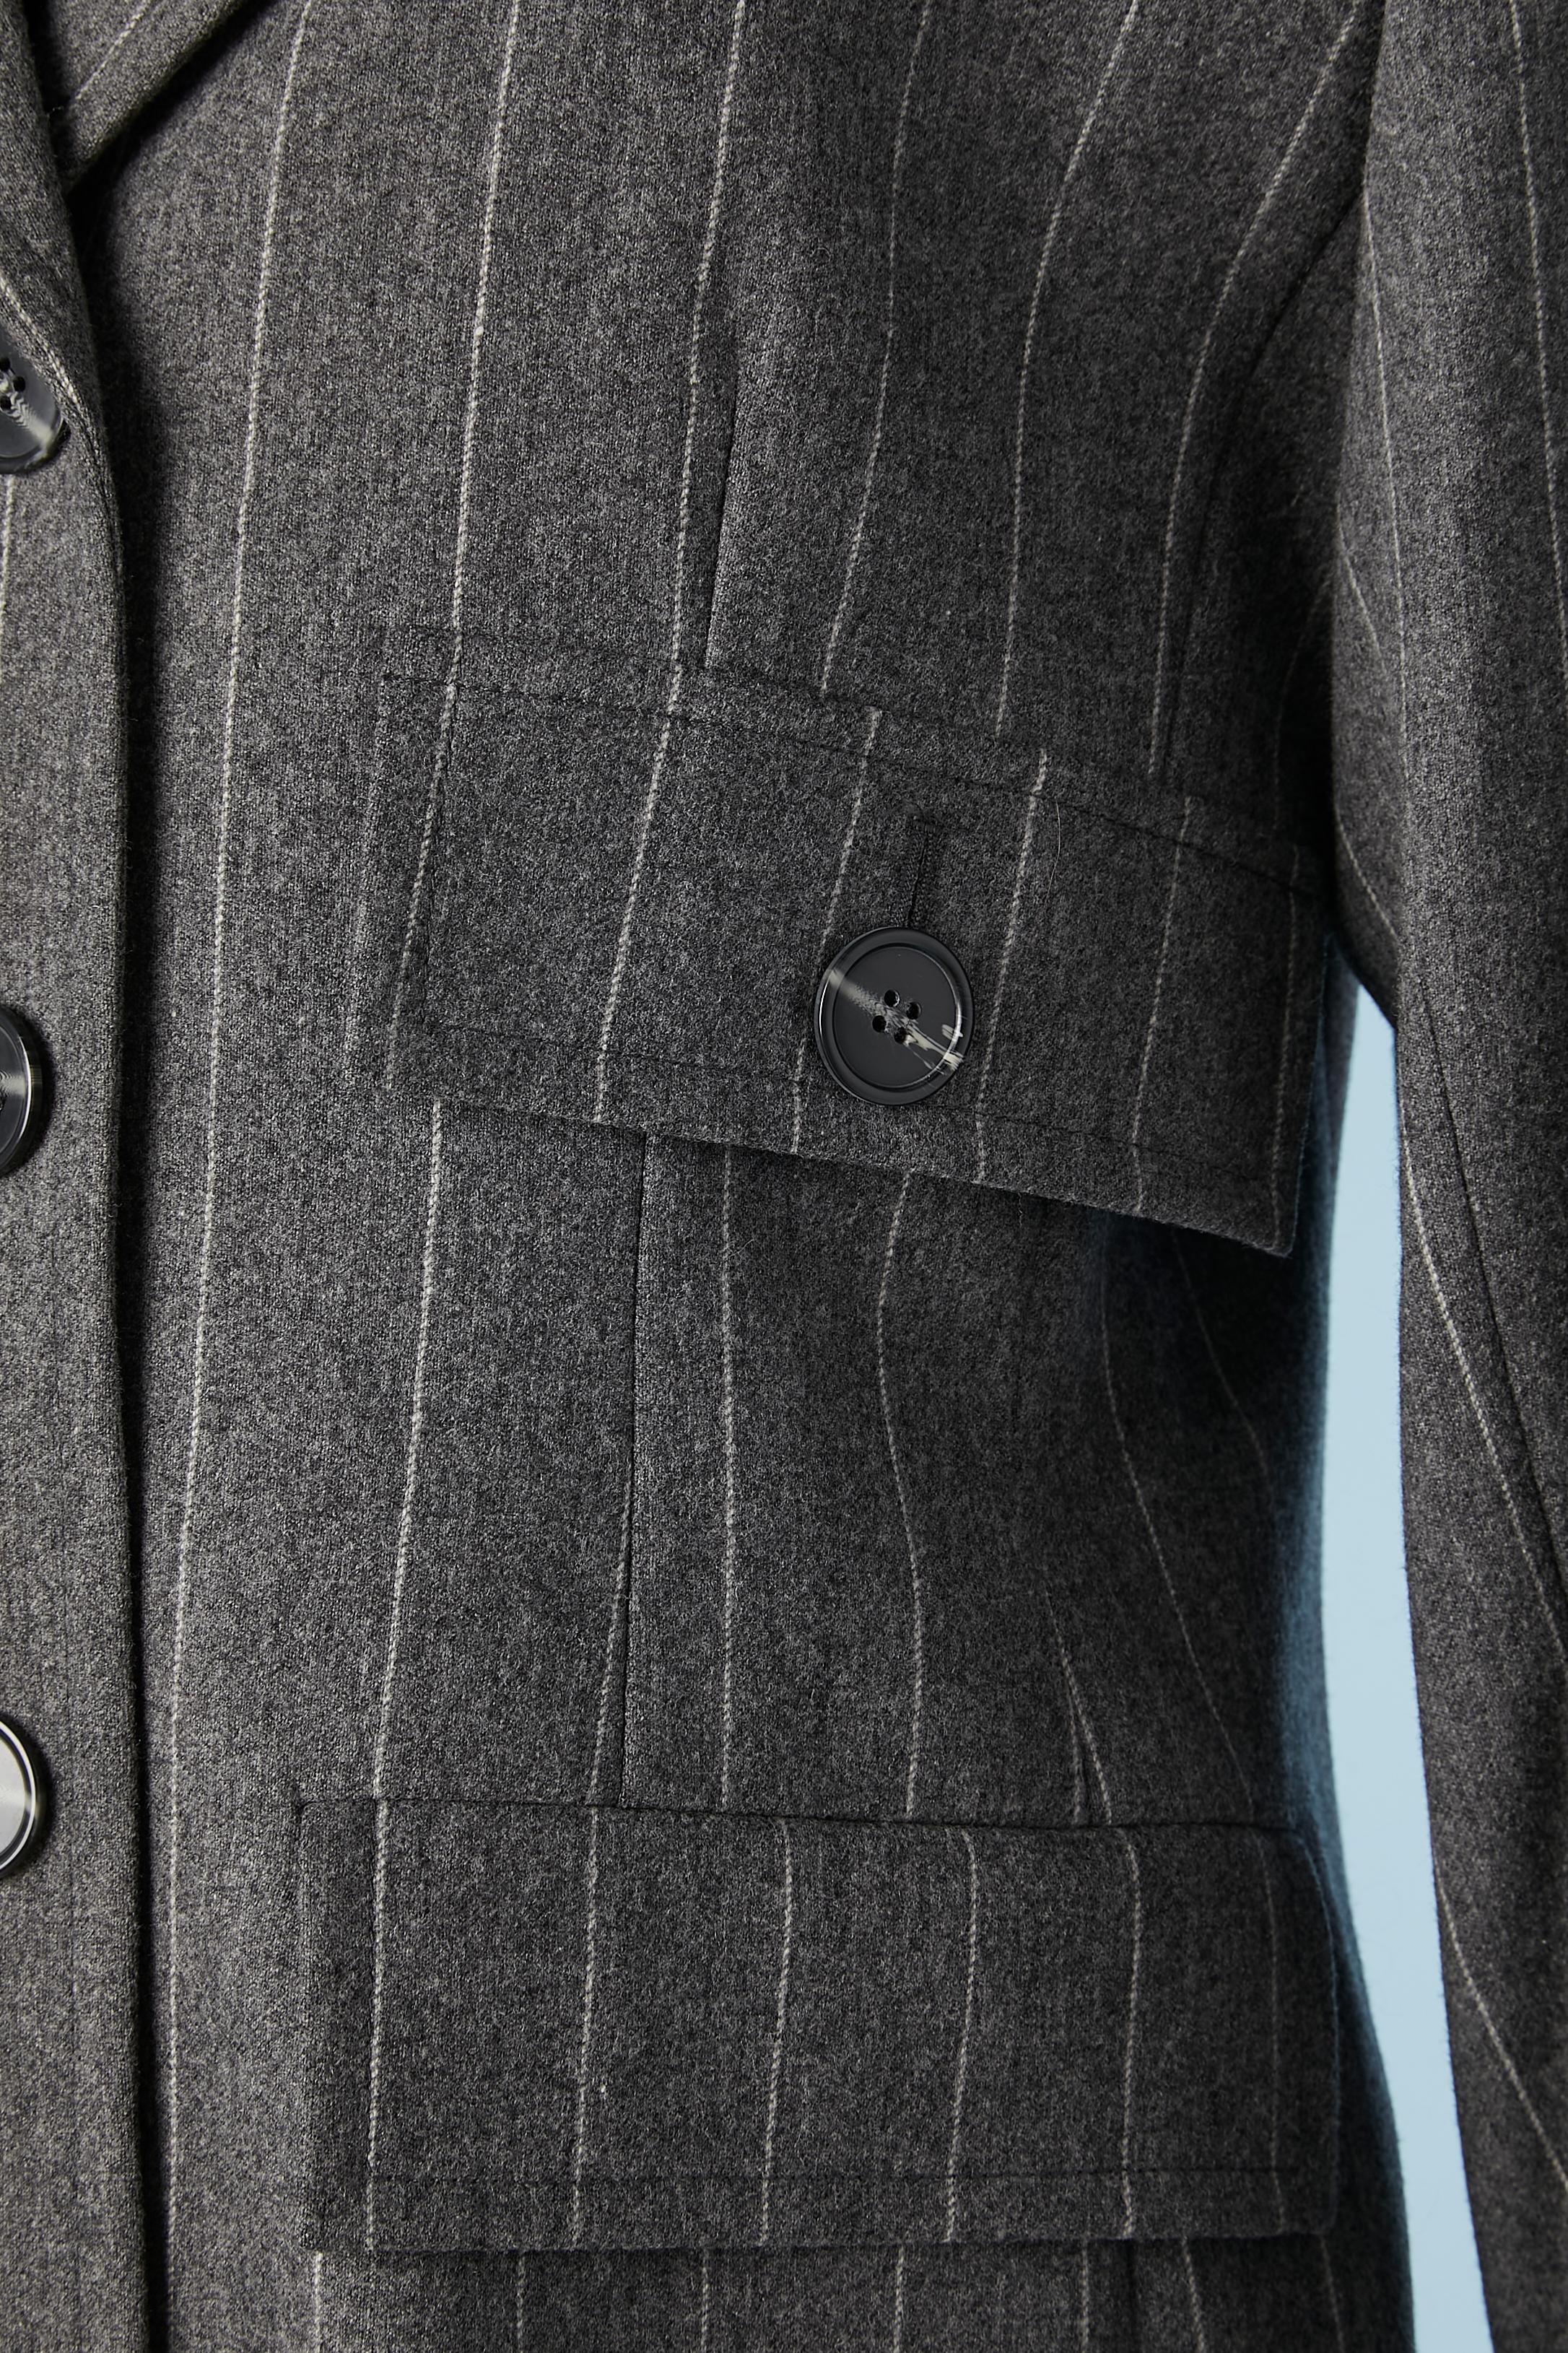 Black Grey pinstripes trouser suit in wool Yves Saint Laurent Variation  For Sale